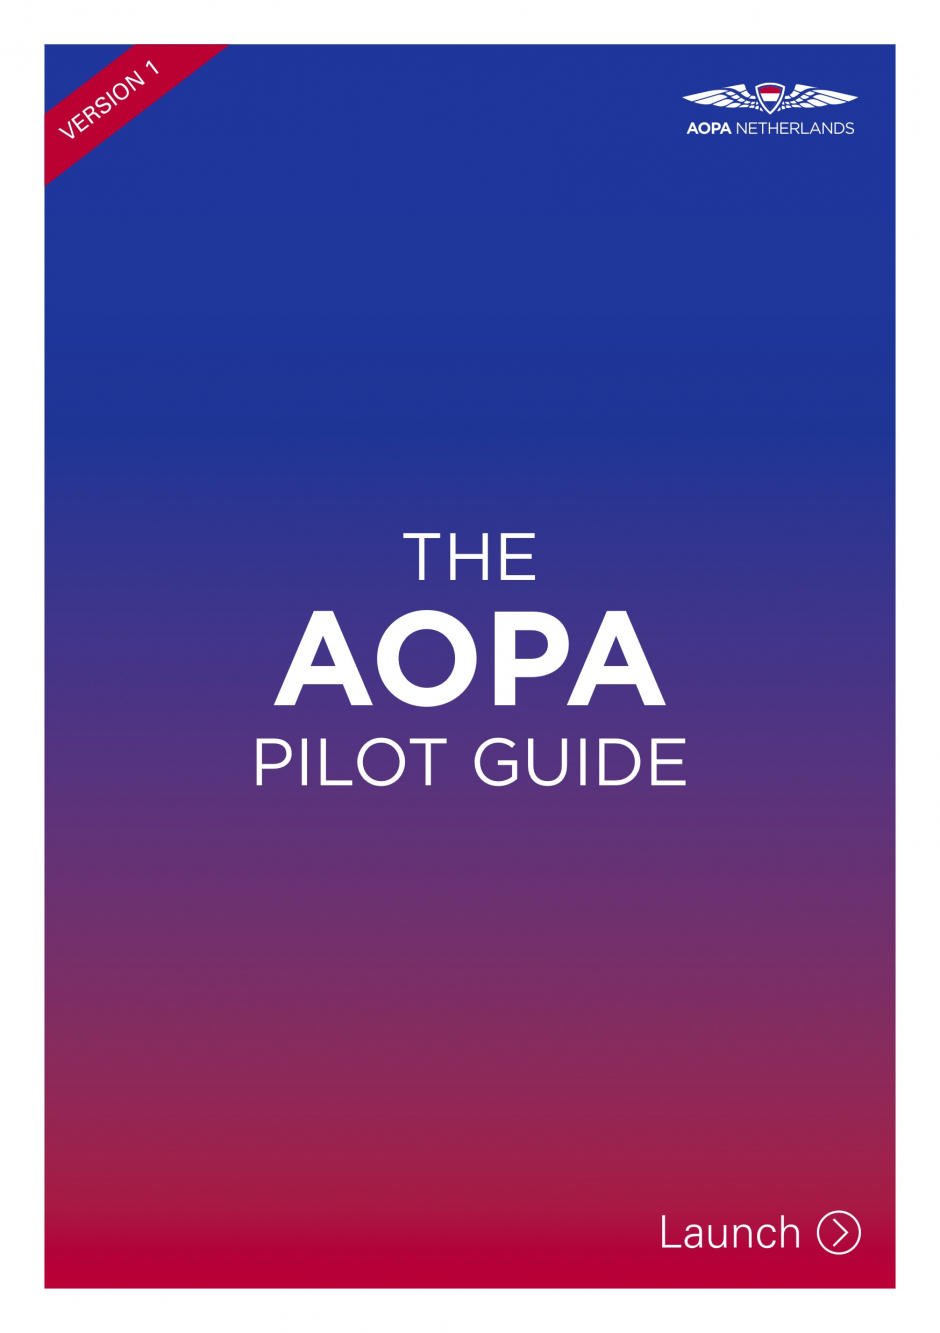 The AOPA Pilot Guide